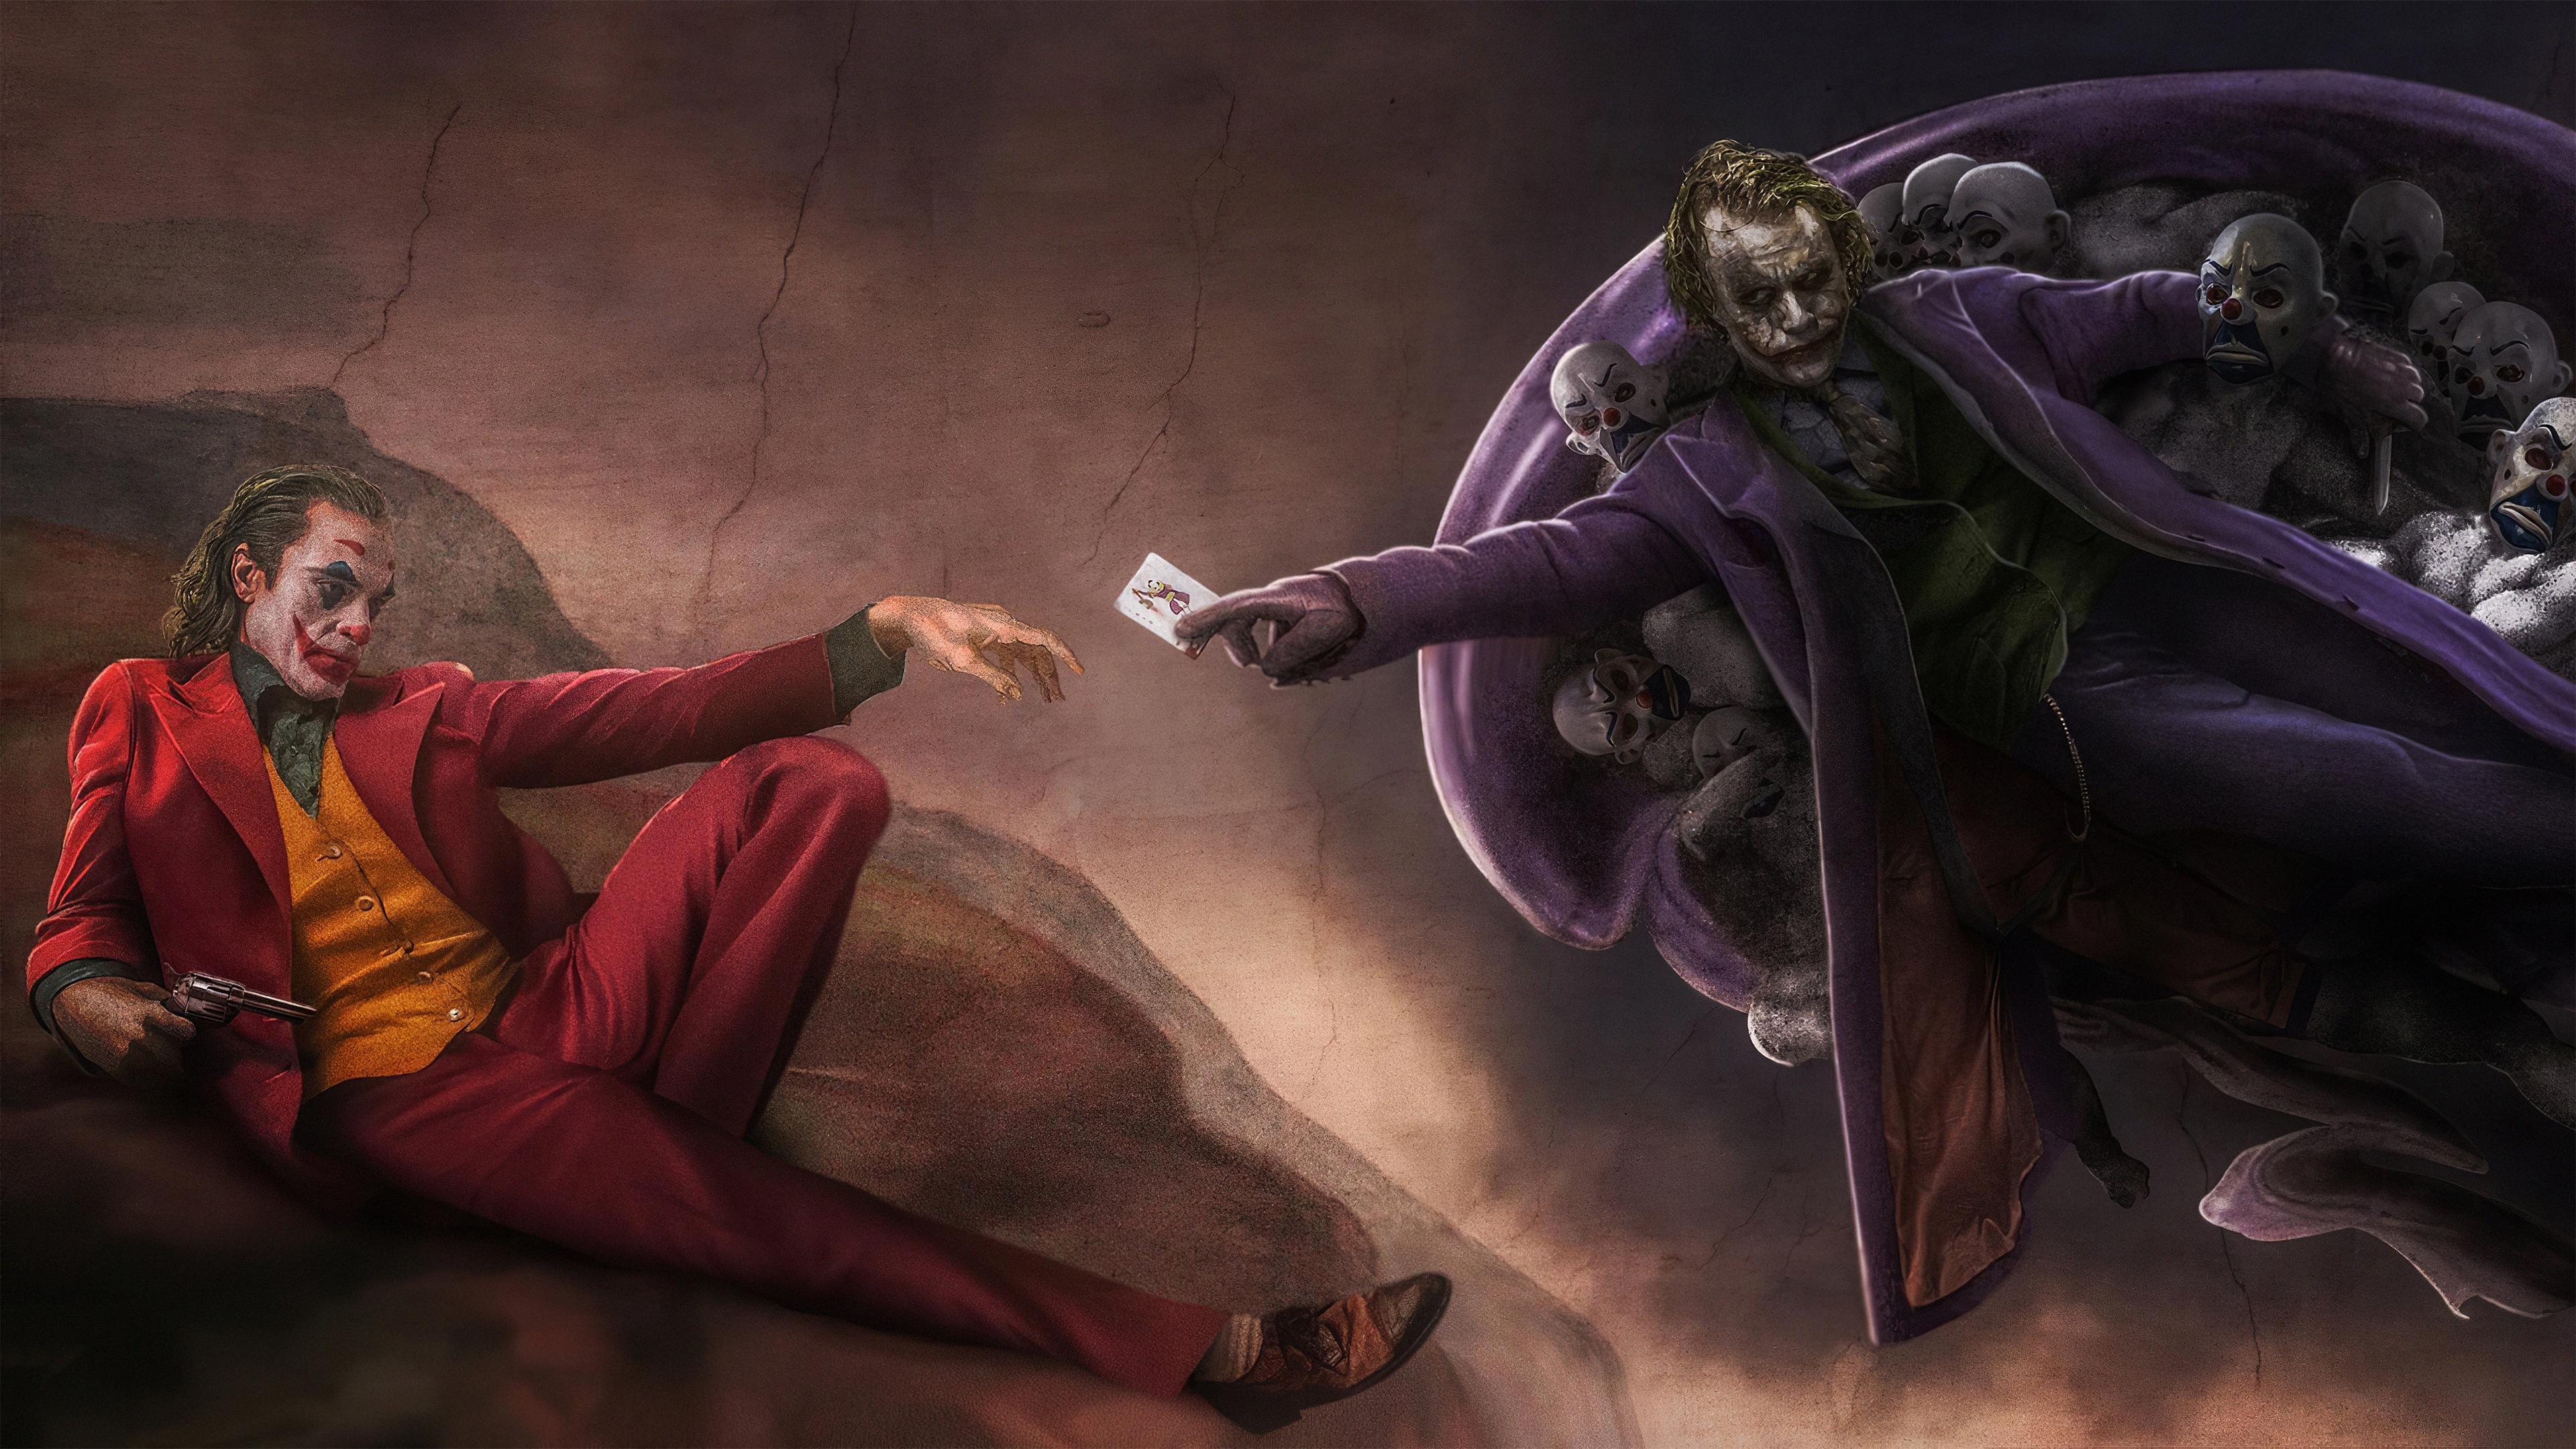 Joker as Joaquin Phoenix and Heath Ledger in Michelangelo painting